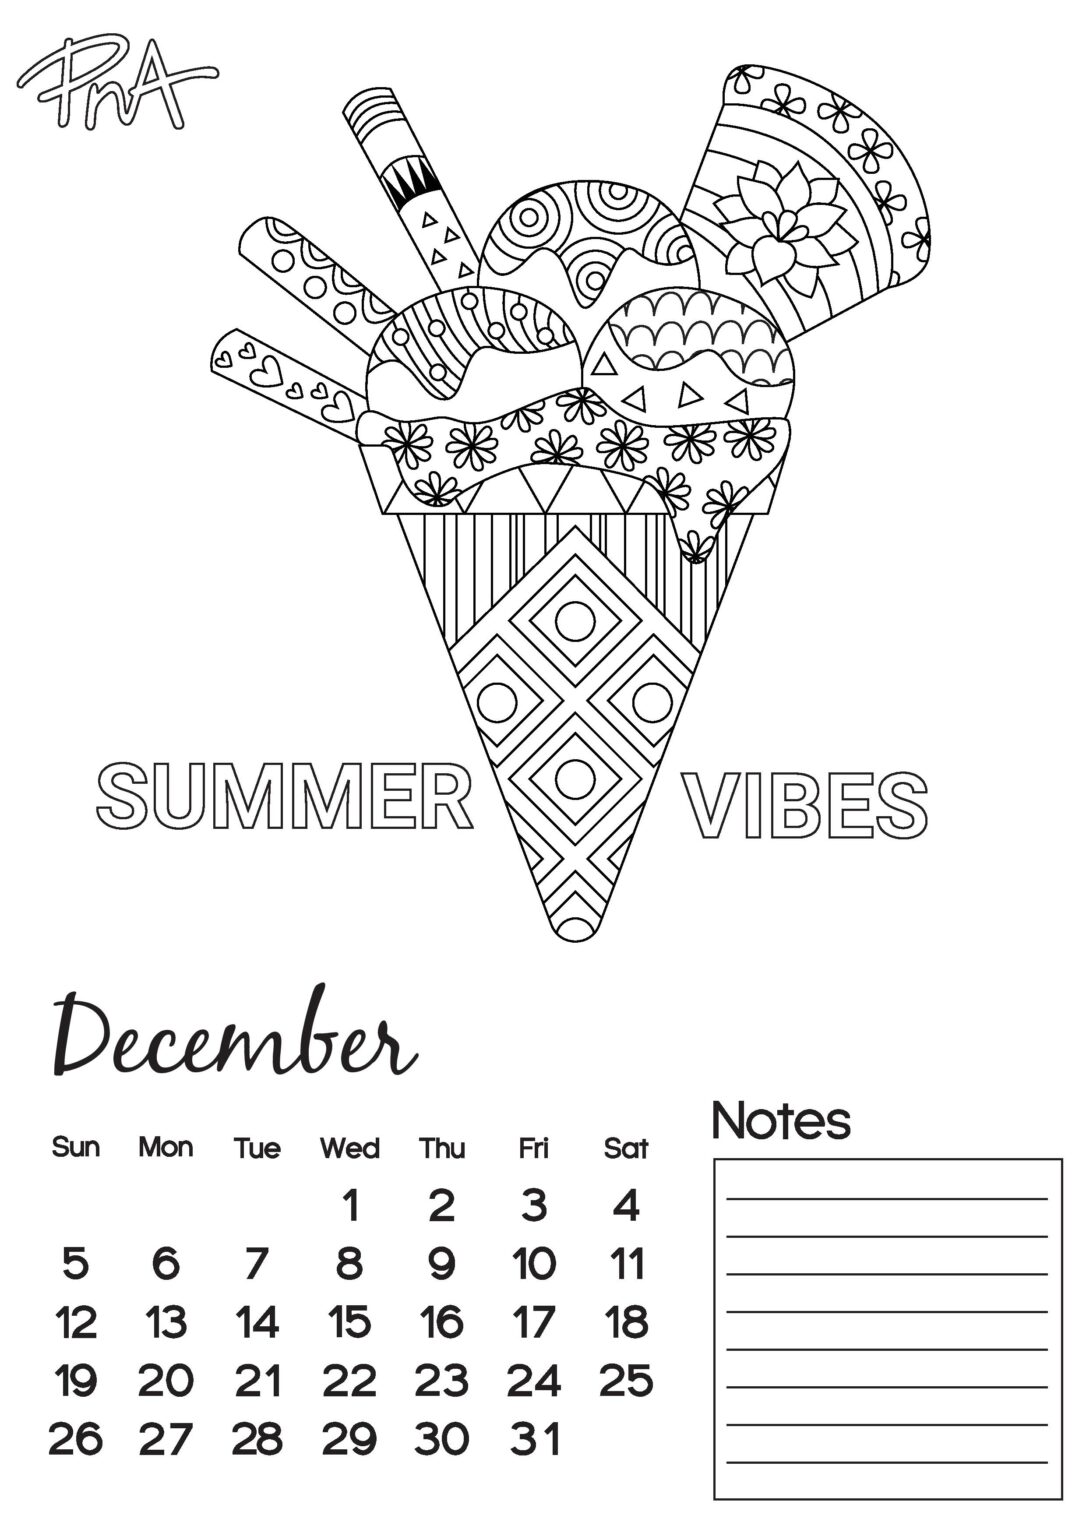 december-free-colouring-calendar-pna-colour-your-world